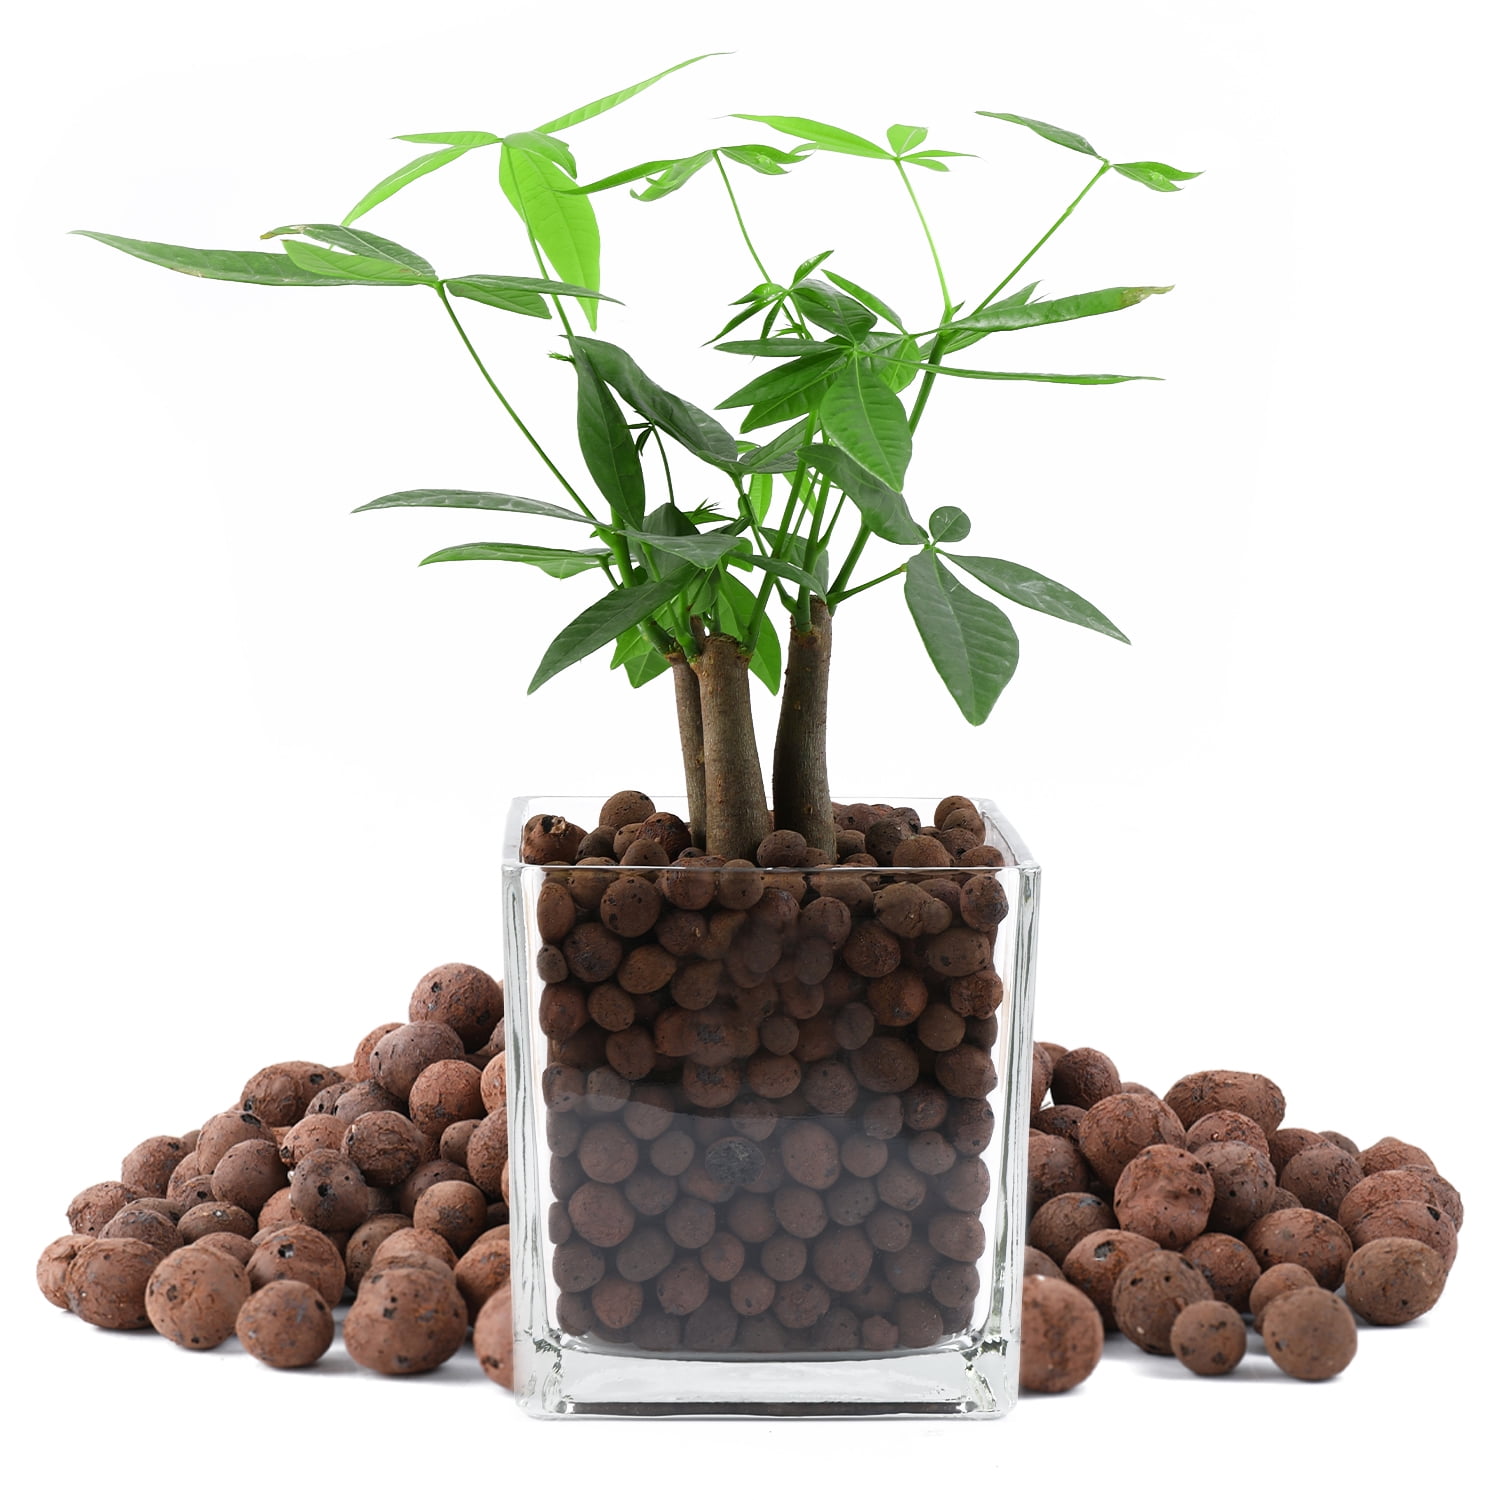  Rurtsva Natural Organic Clay Pebbles, 5LBS 8mm-18mm Expanded  Leca Balls Plant Garden Soil, Grow Media for Hydroponics, Decoration,  Aquaponics, Gardening Essentials : Patio, Lawn & Garden